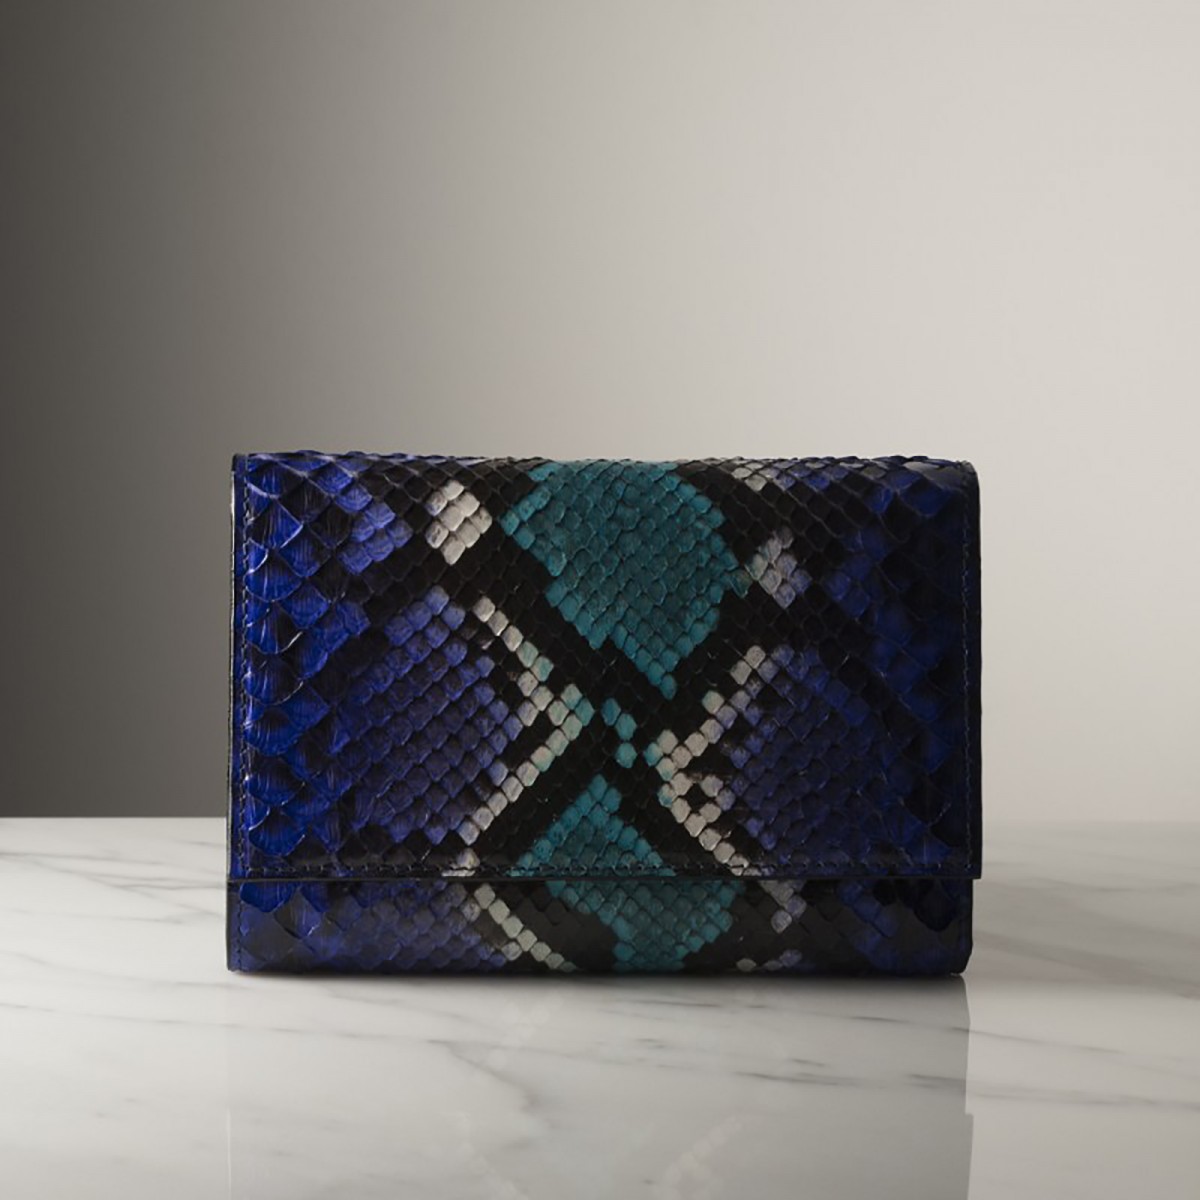 HENRIETTE PYTHON - Python leather wallet, handmade in Italy